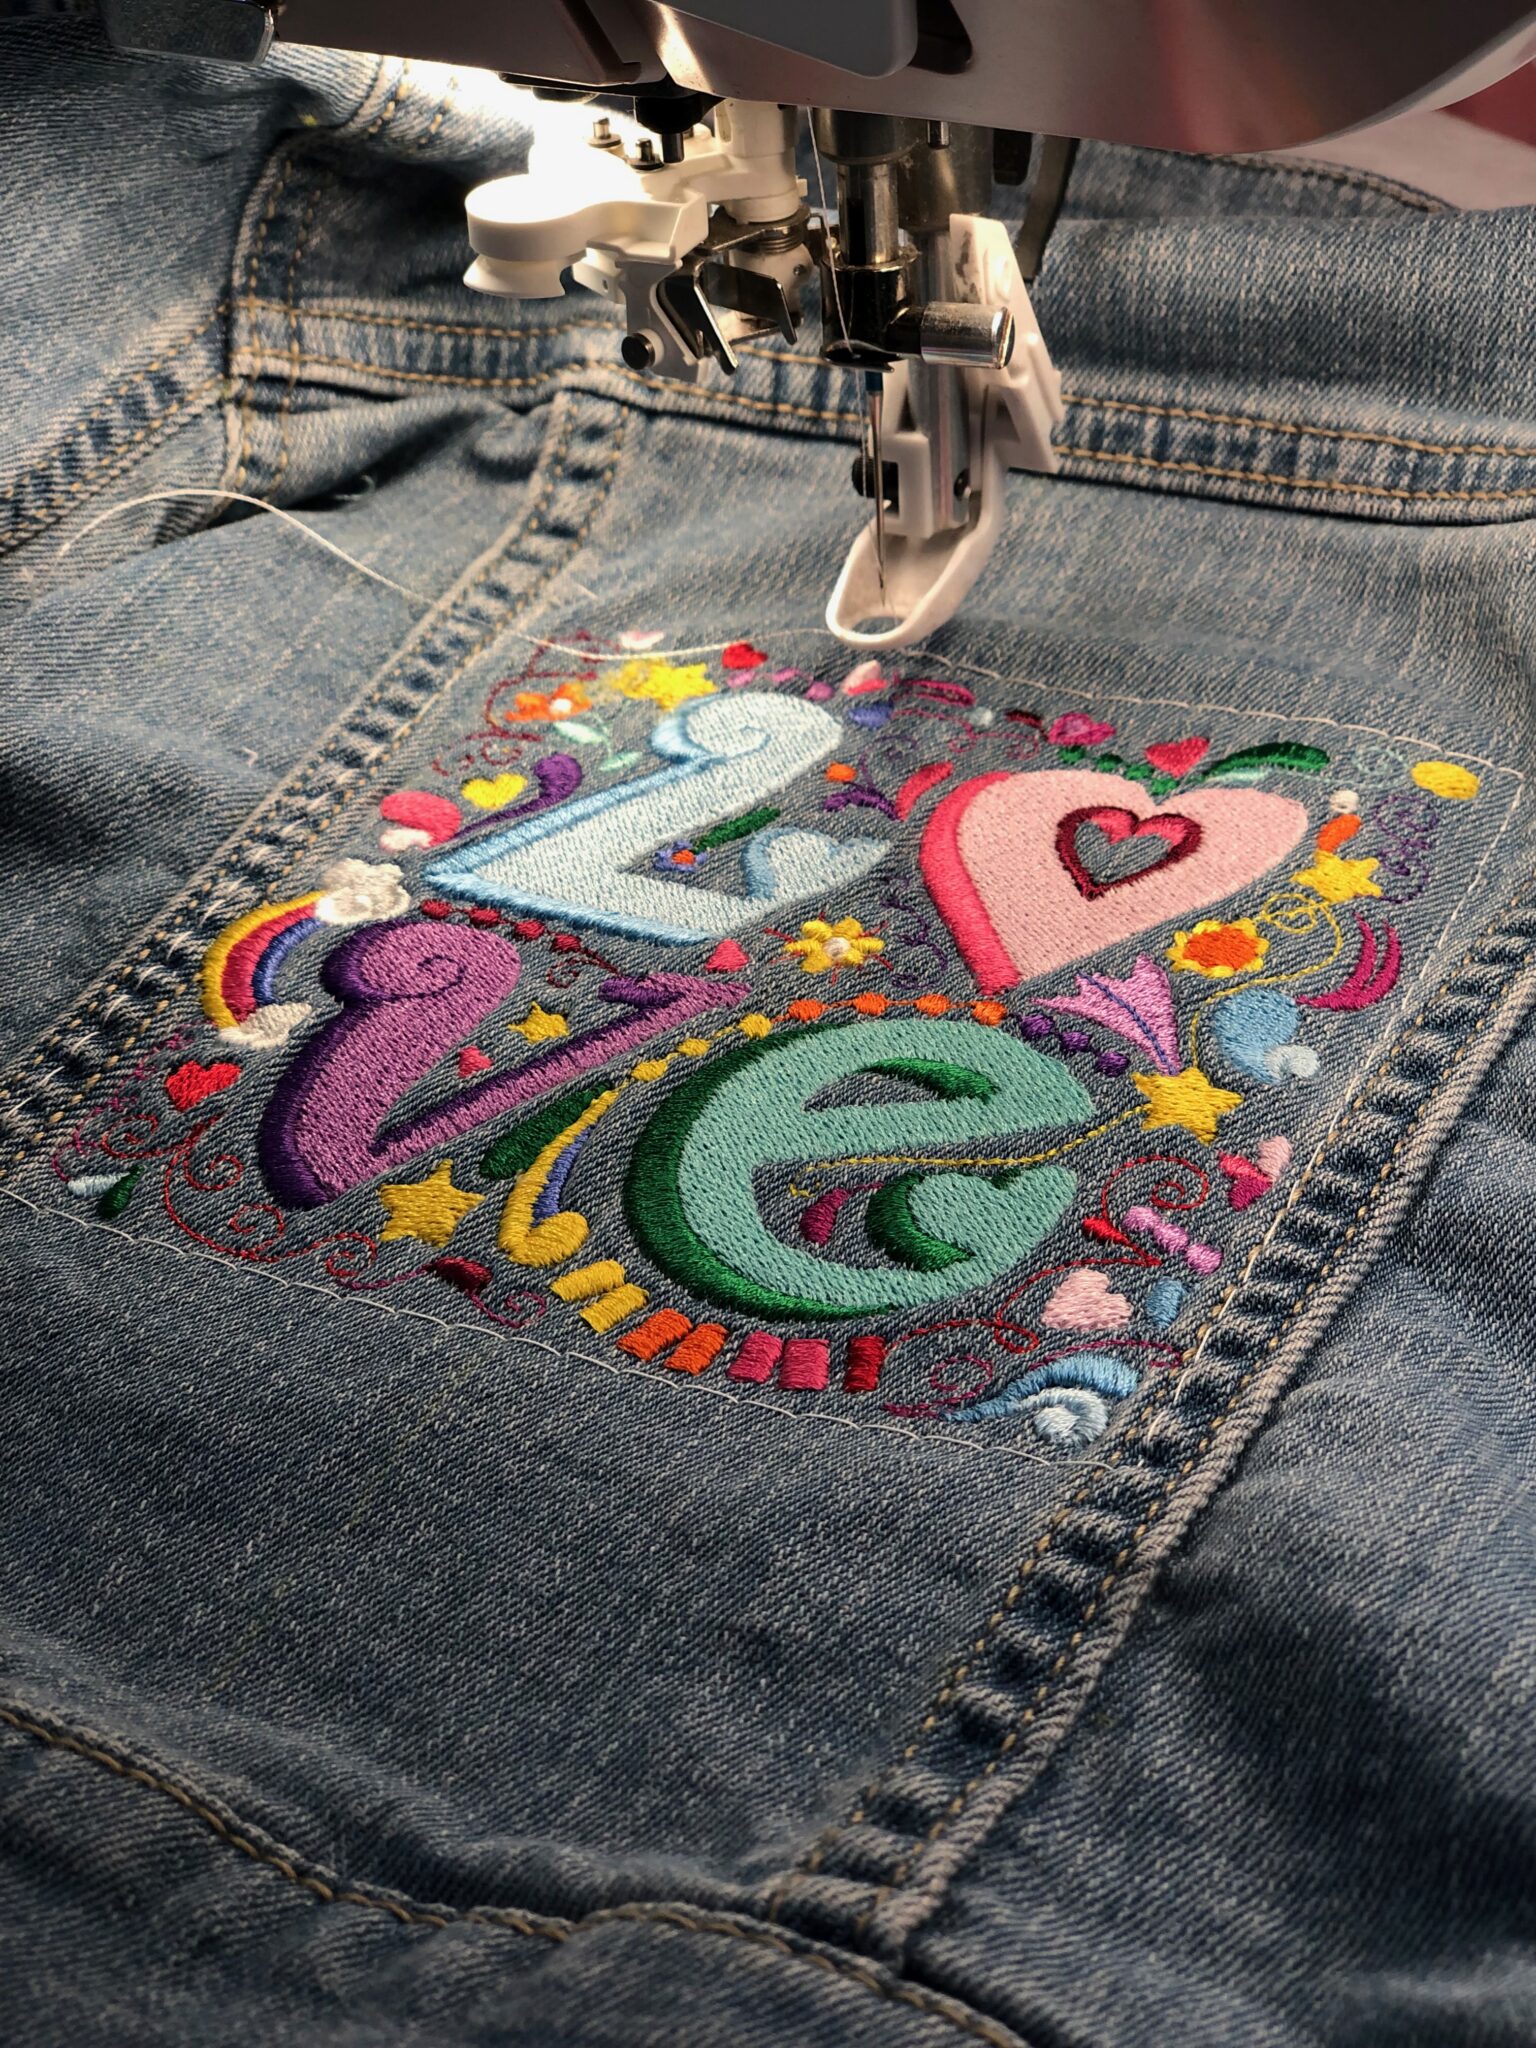 Denim Embroidery Digs - Tips, Tricks & Takeaways - Sulky